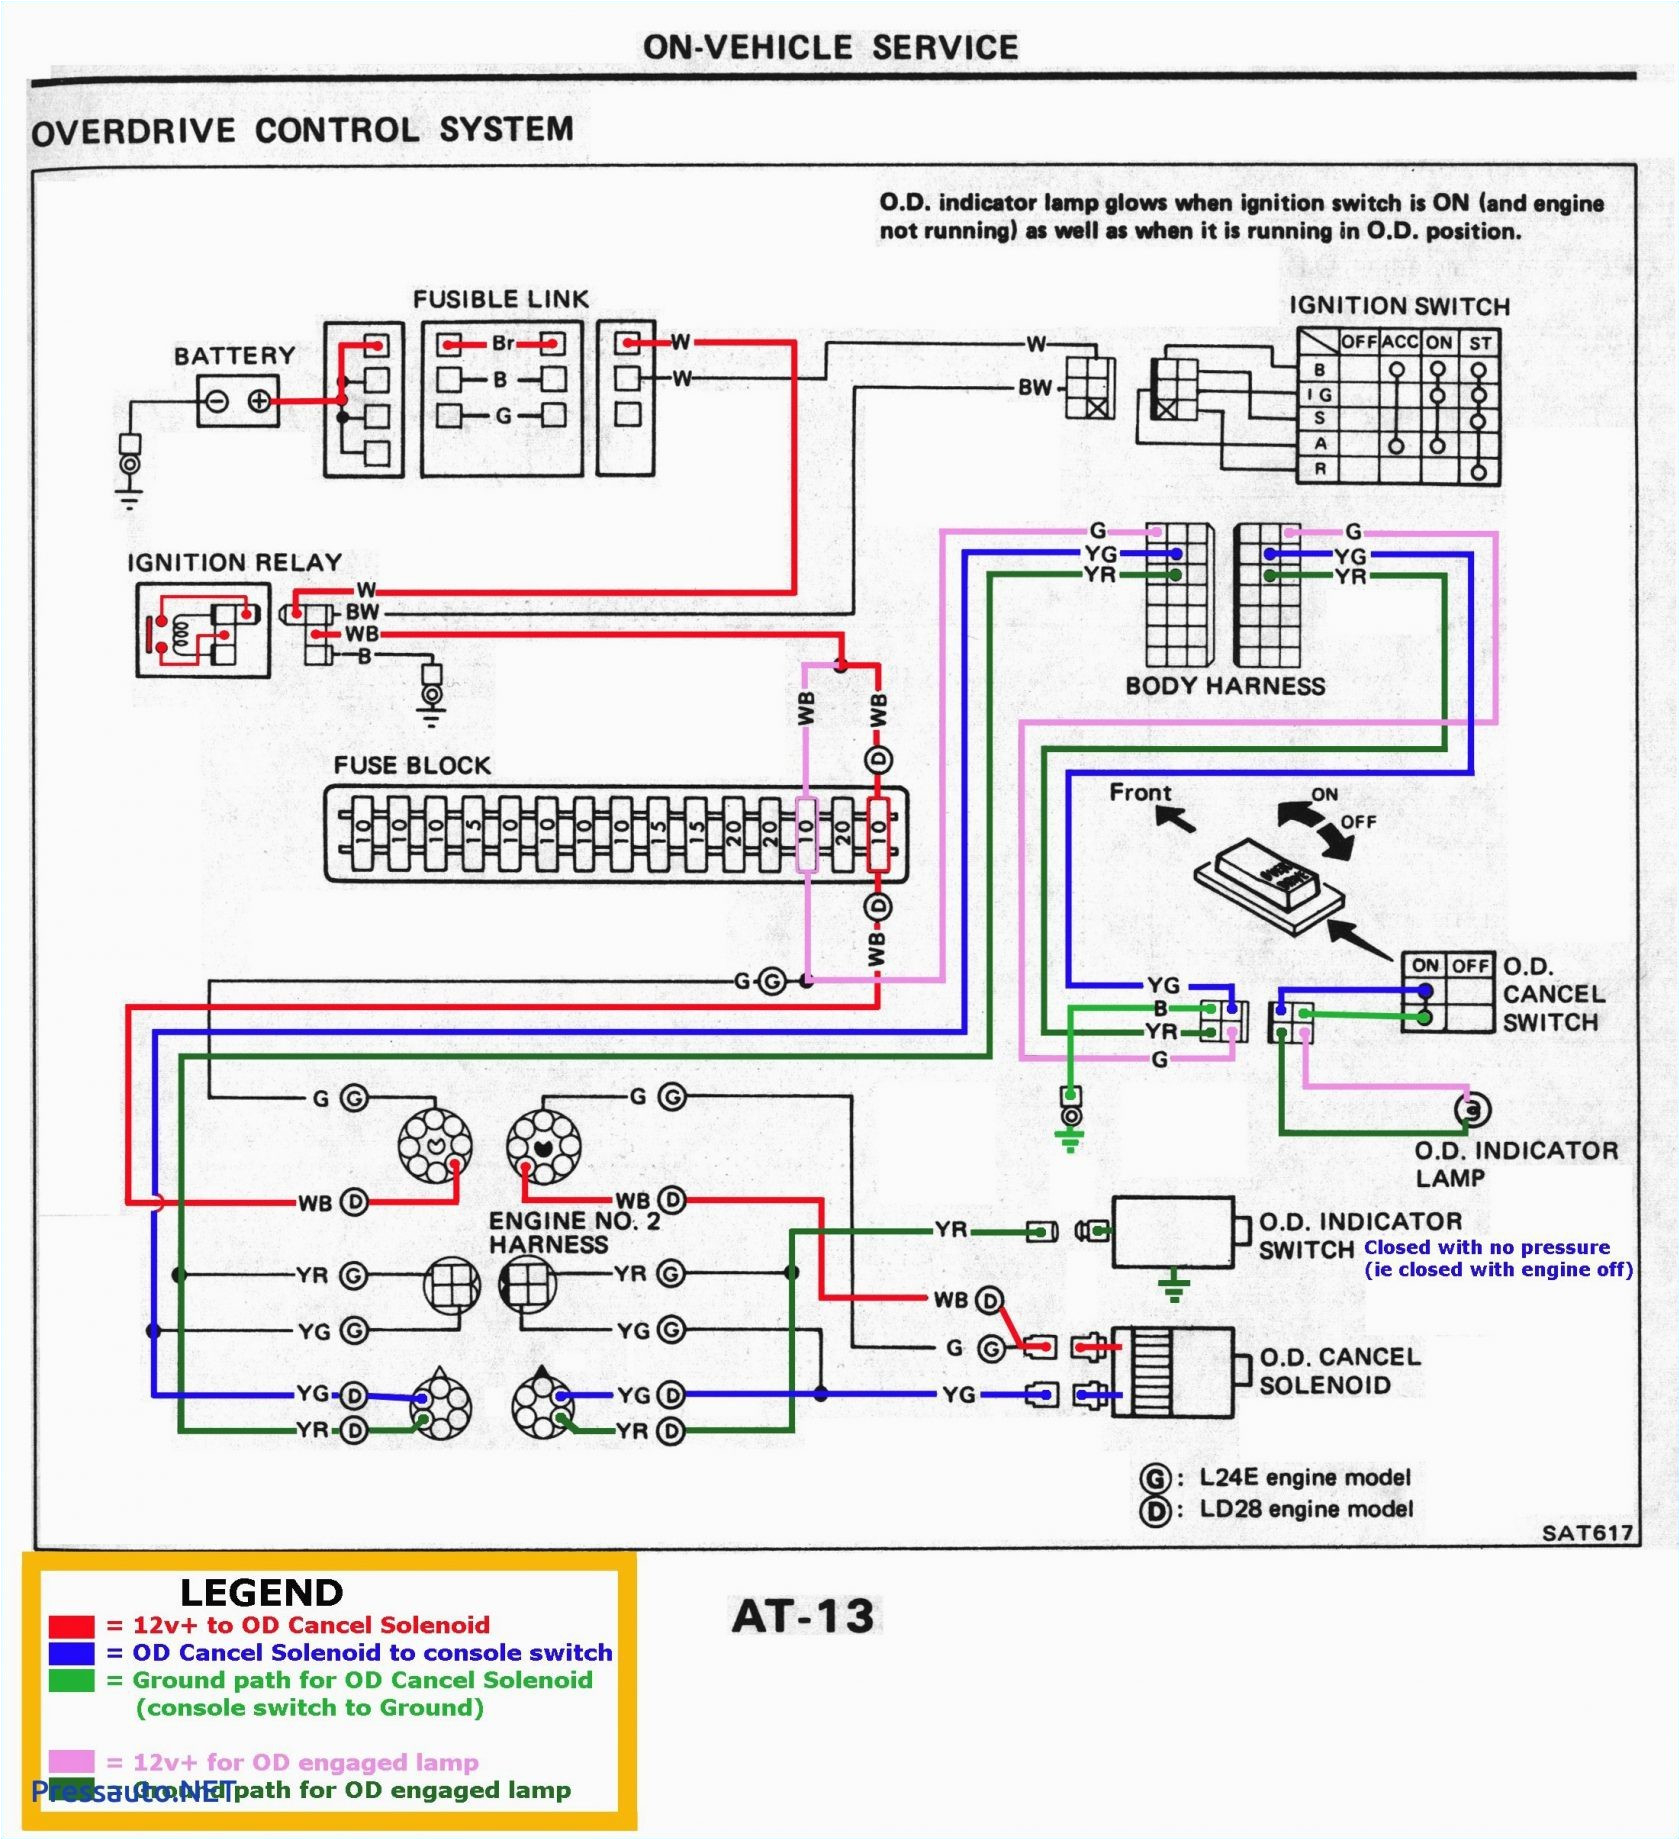 2007 Honda Civic Wiring Diagram Honda Civic Headlight Wiring Diagram Wiring Diagrams